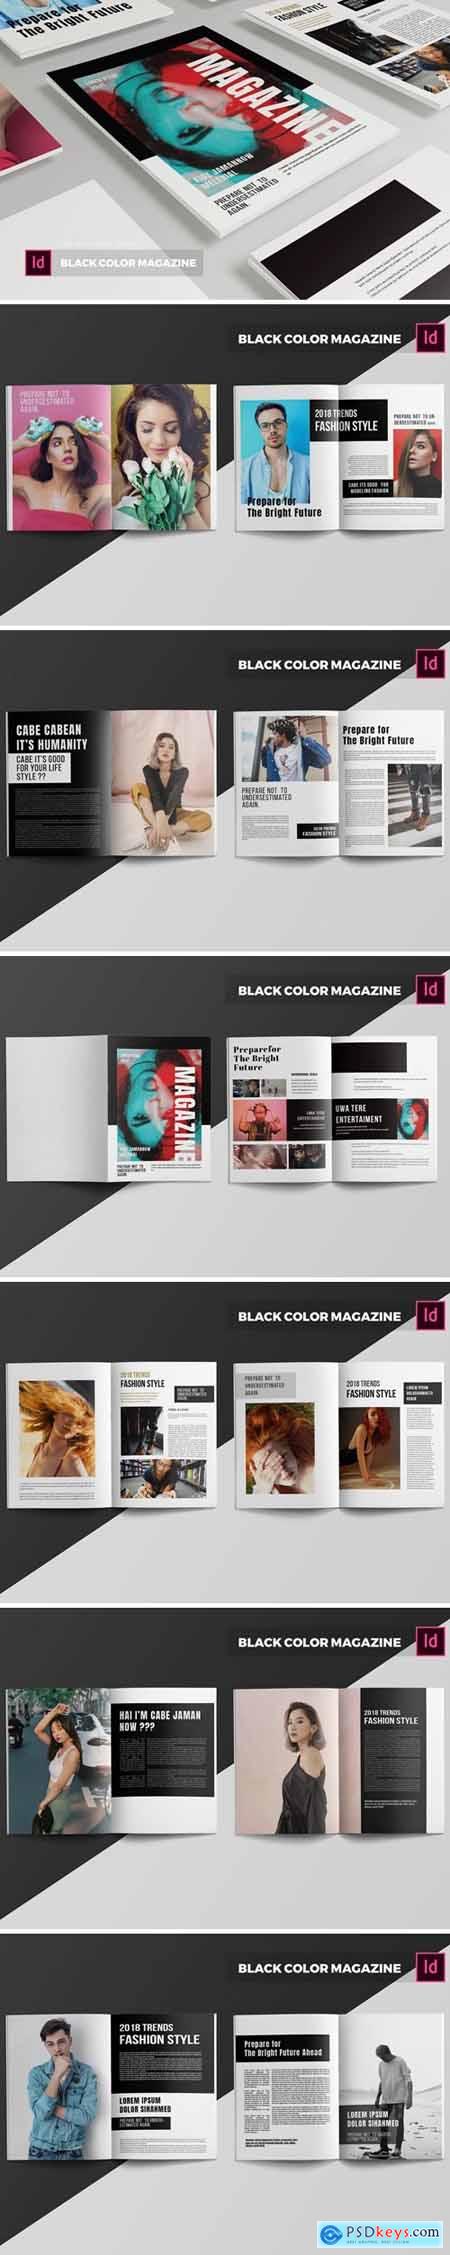 Black Color Magazine Template